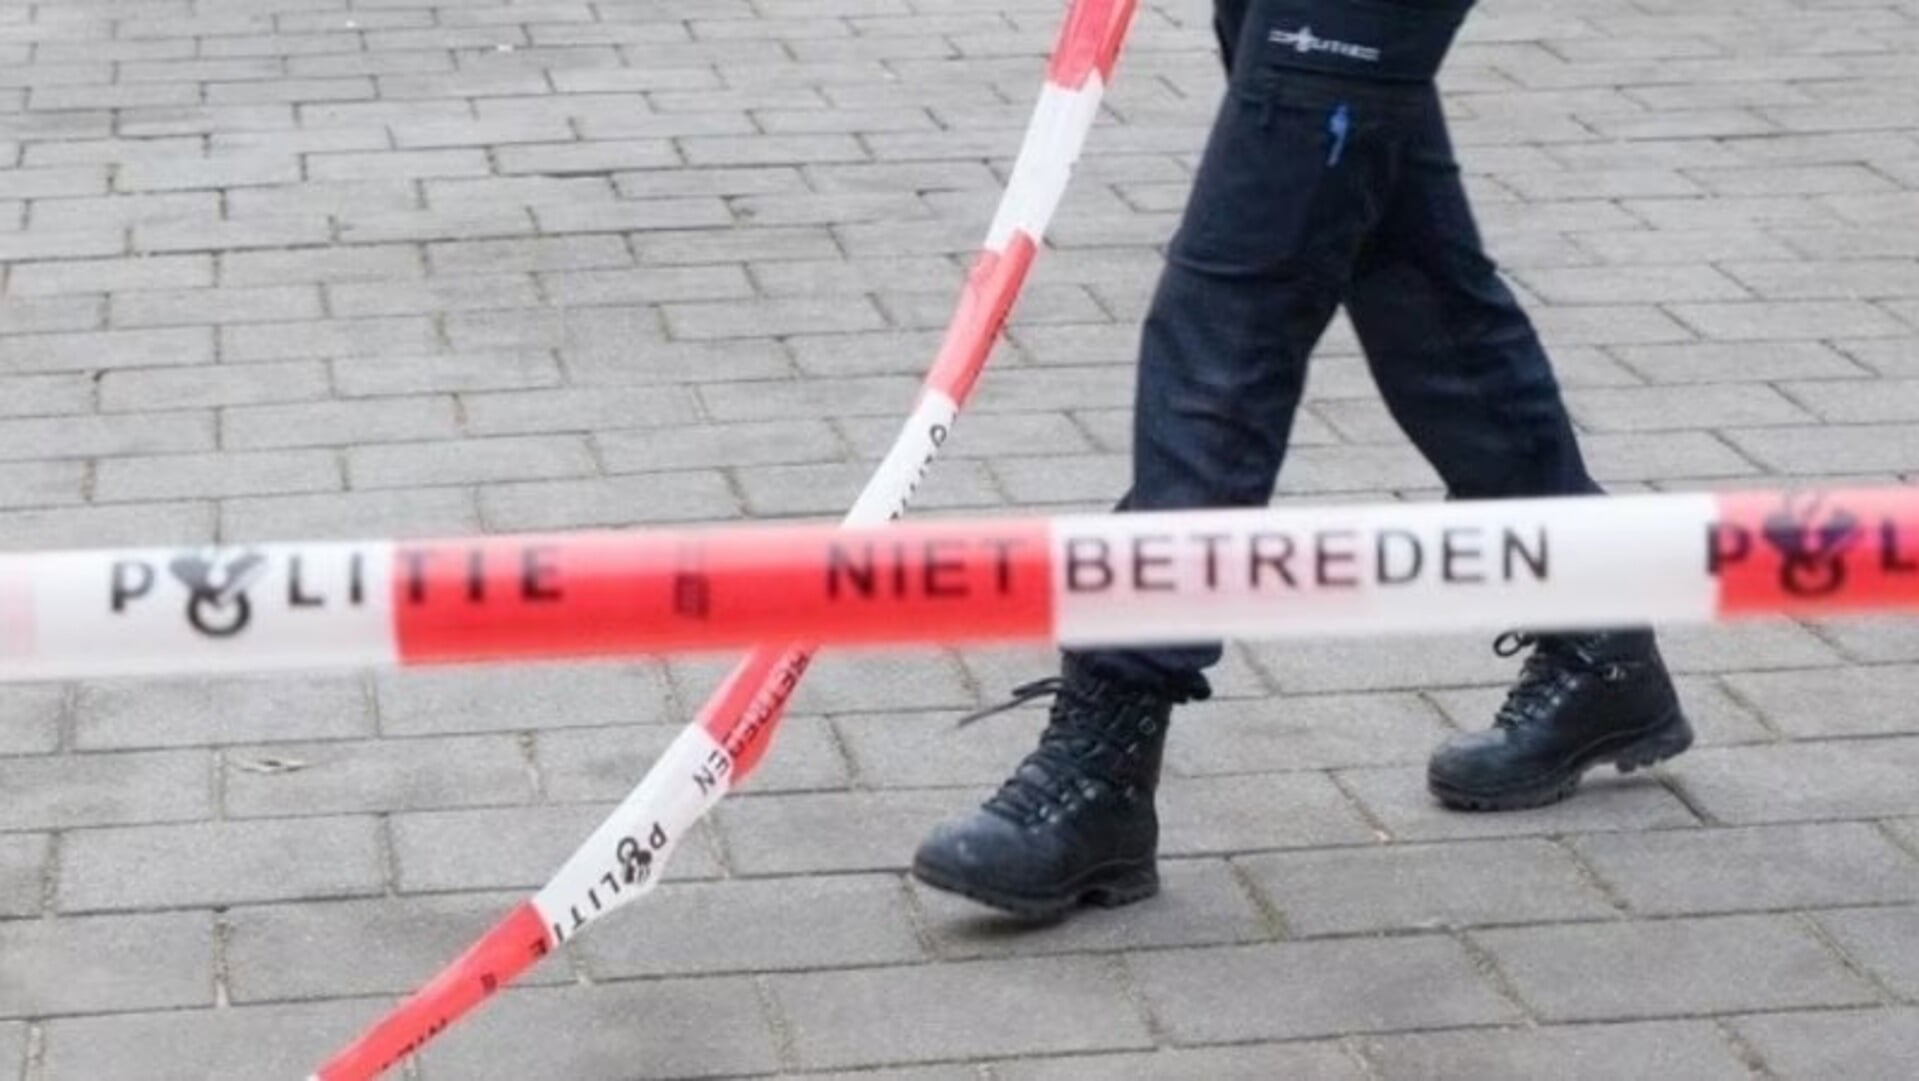 Beeld: Politie Rotterdam